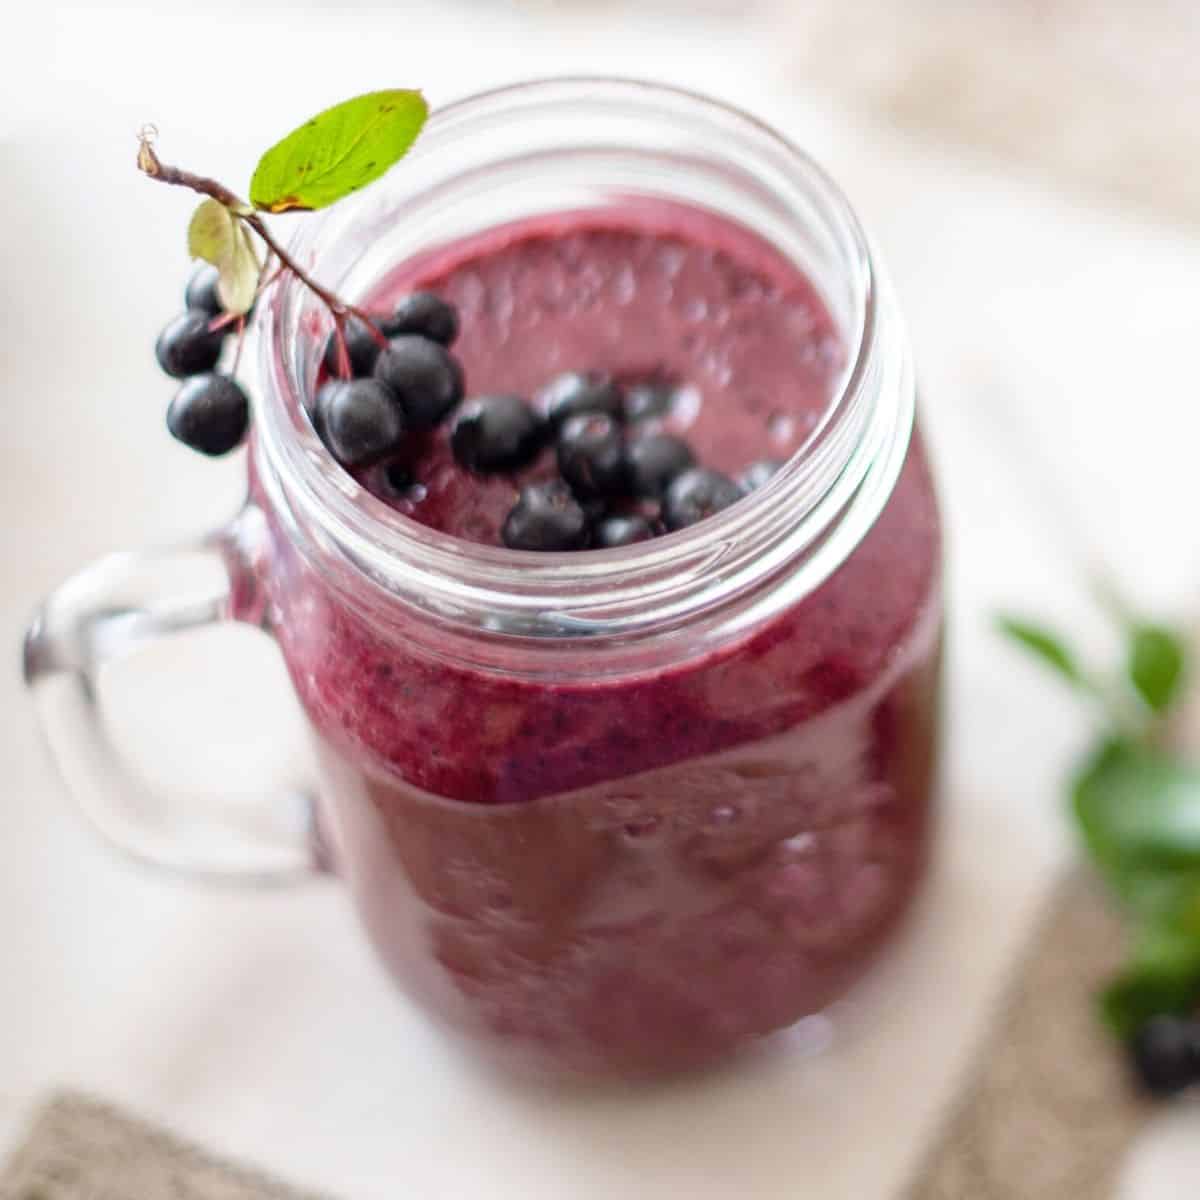 Walnut and blueberry keto smoothie recipe